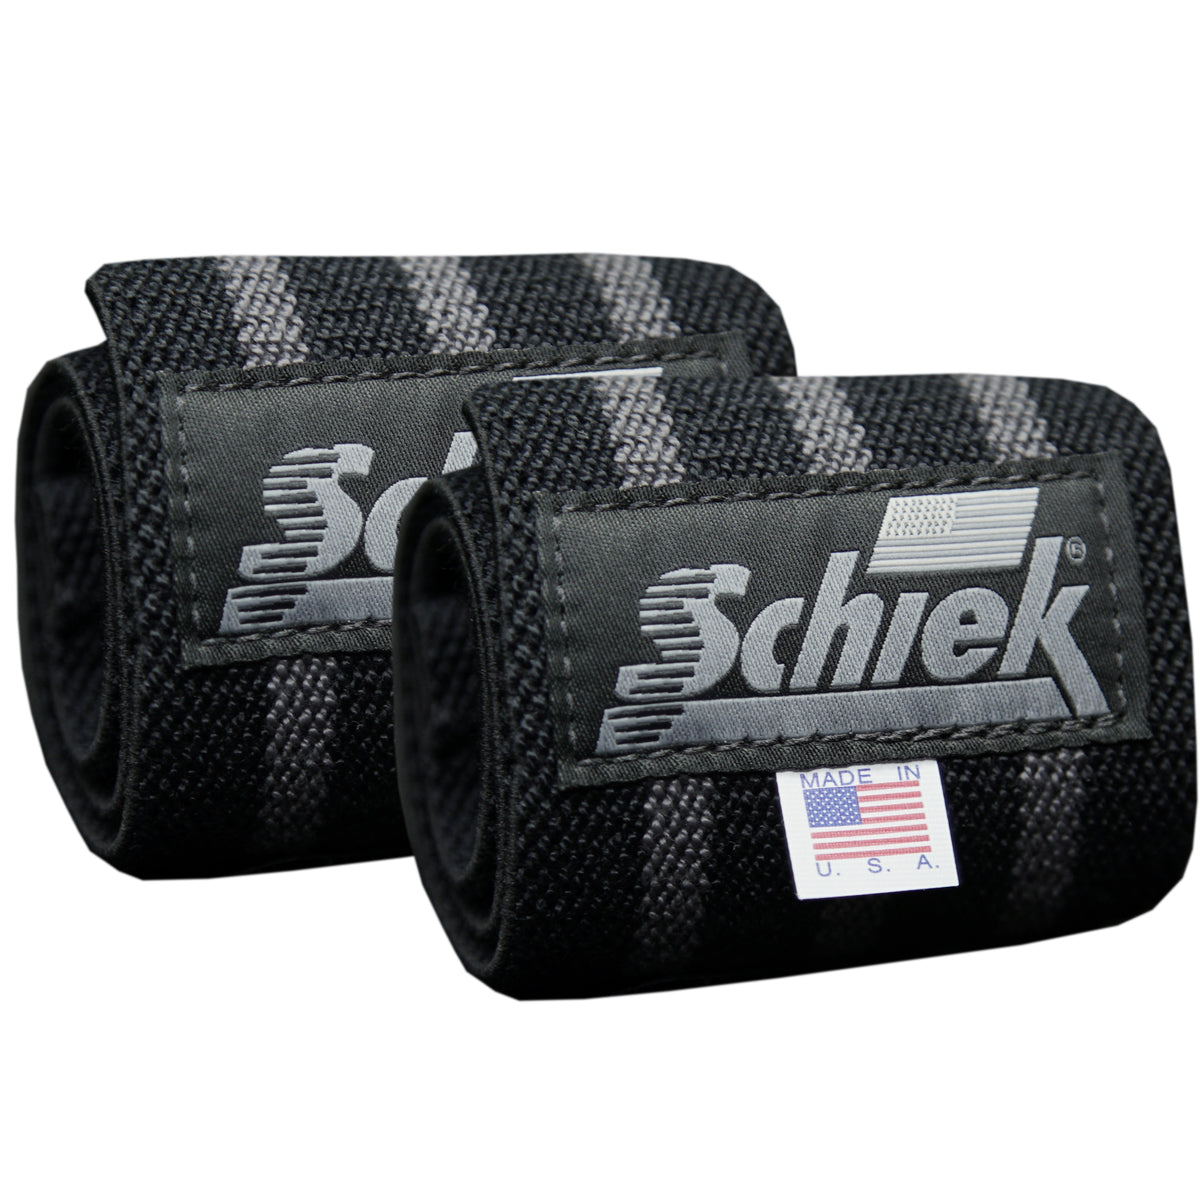 Schiek Sports Black Out Heavyweight Cotton Elastic Wrist Wraps - Black/Silver Schiek Sports